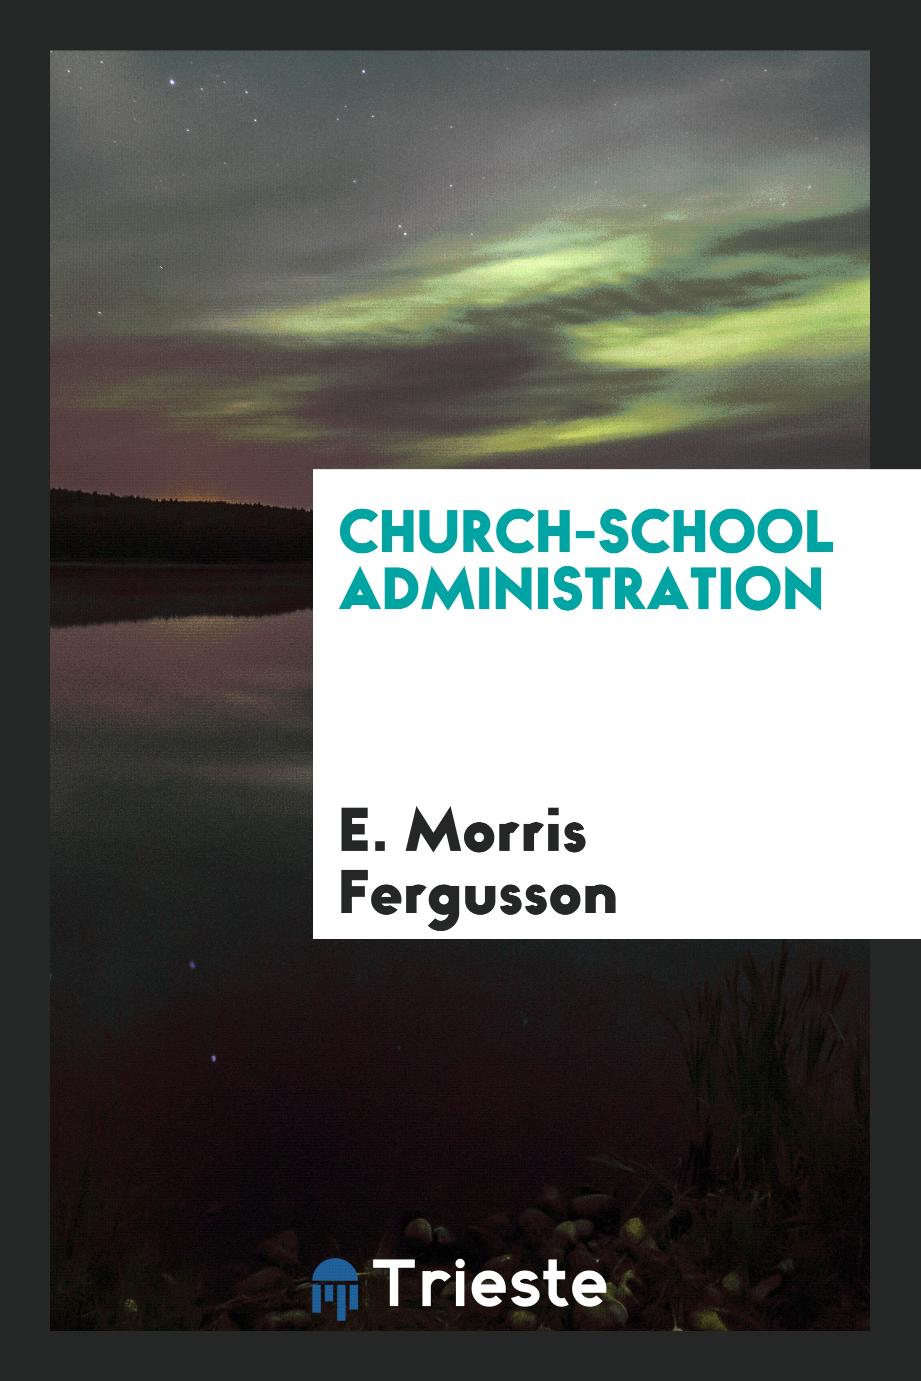 Church-school administration